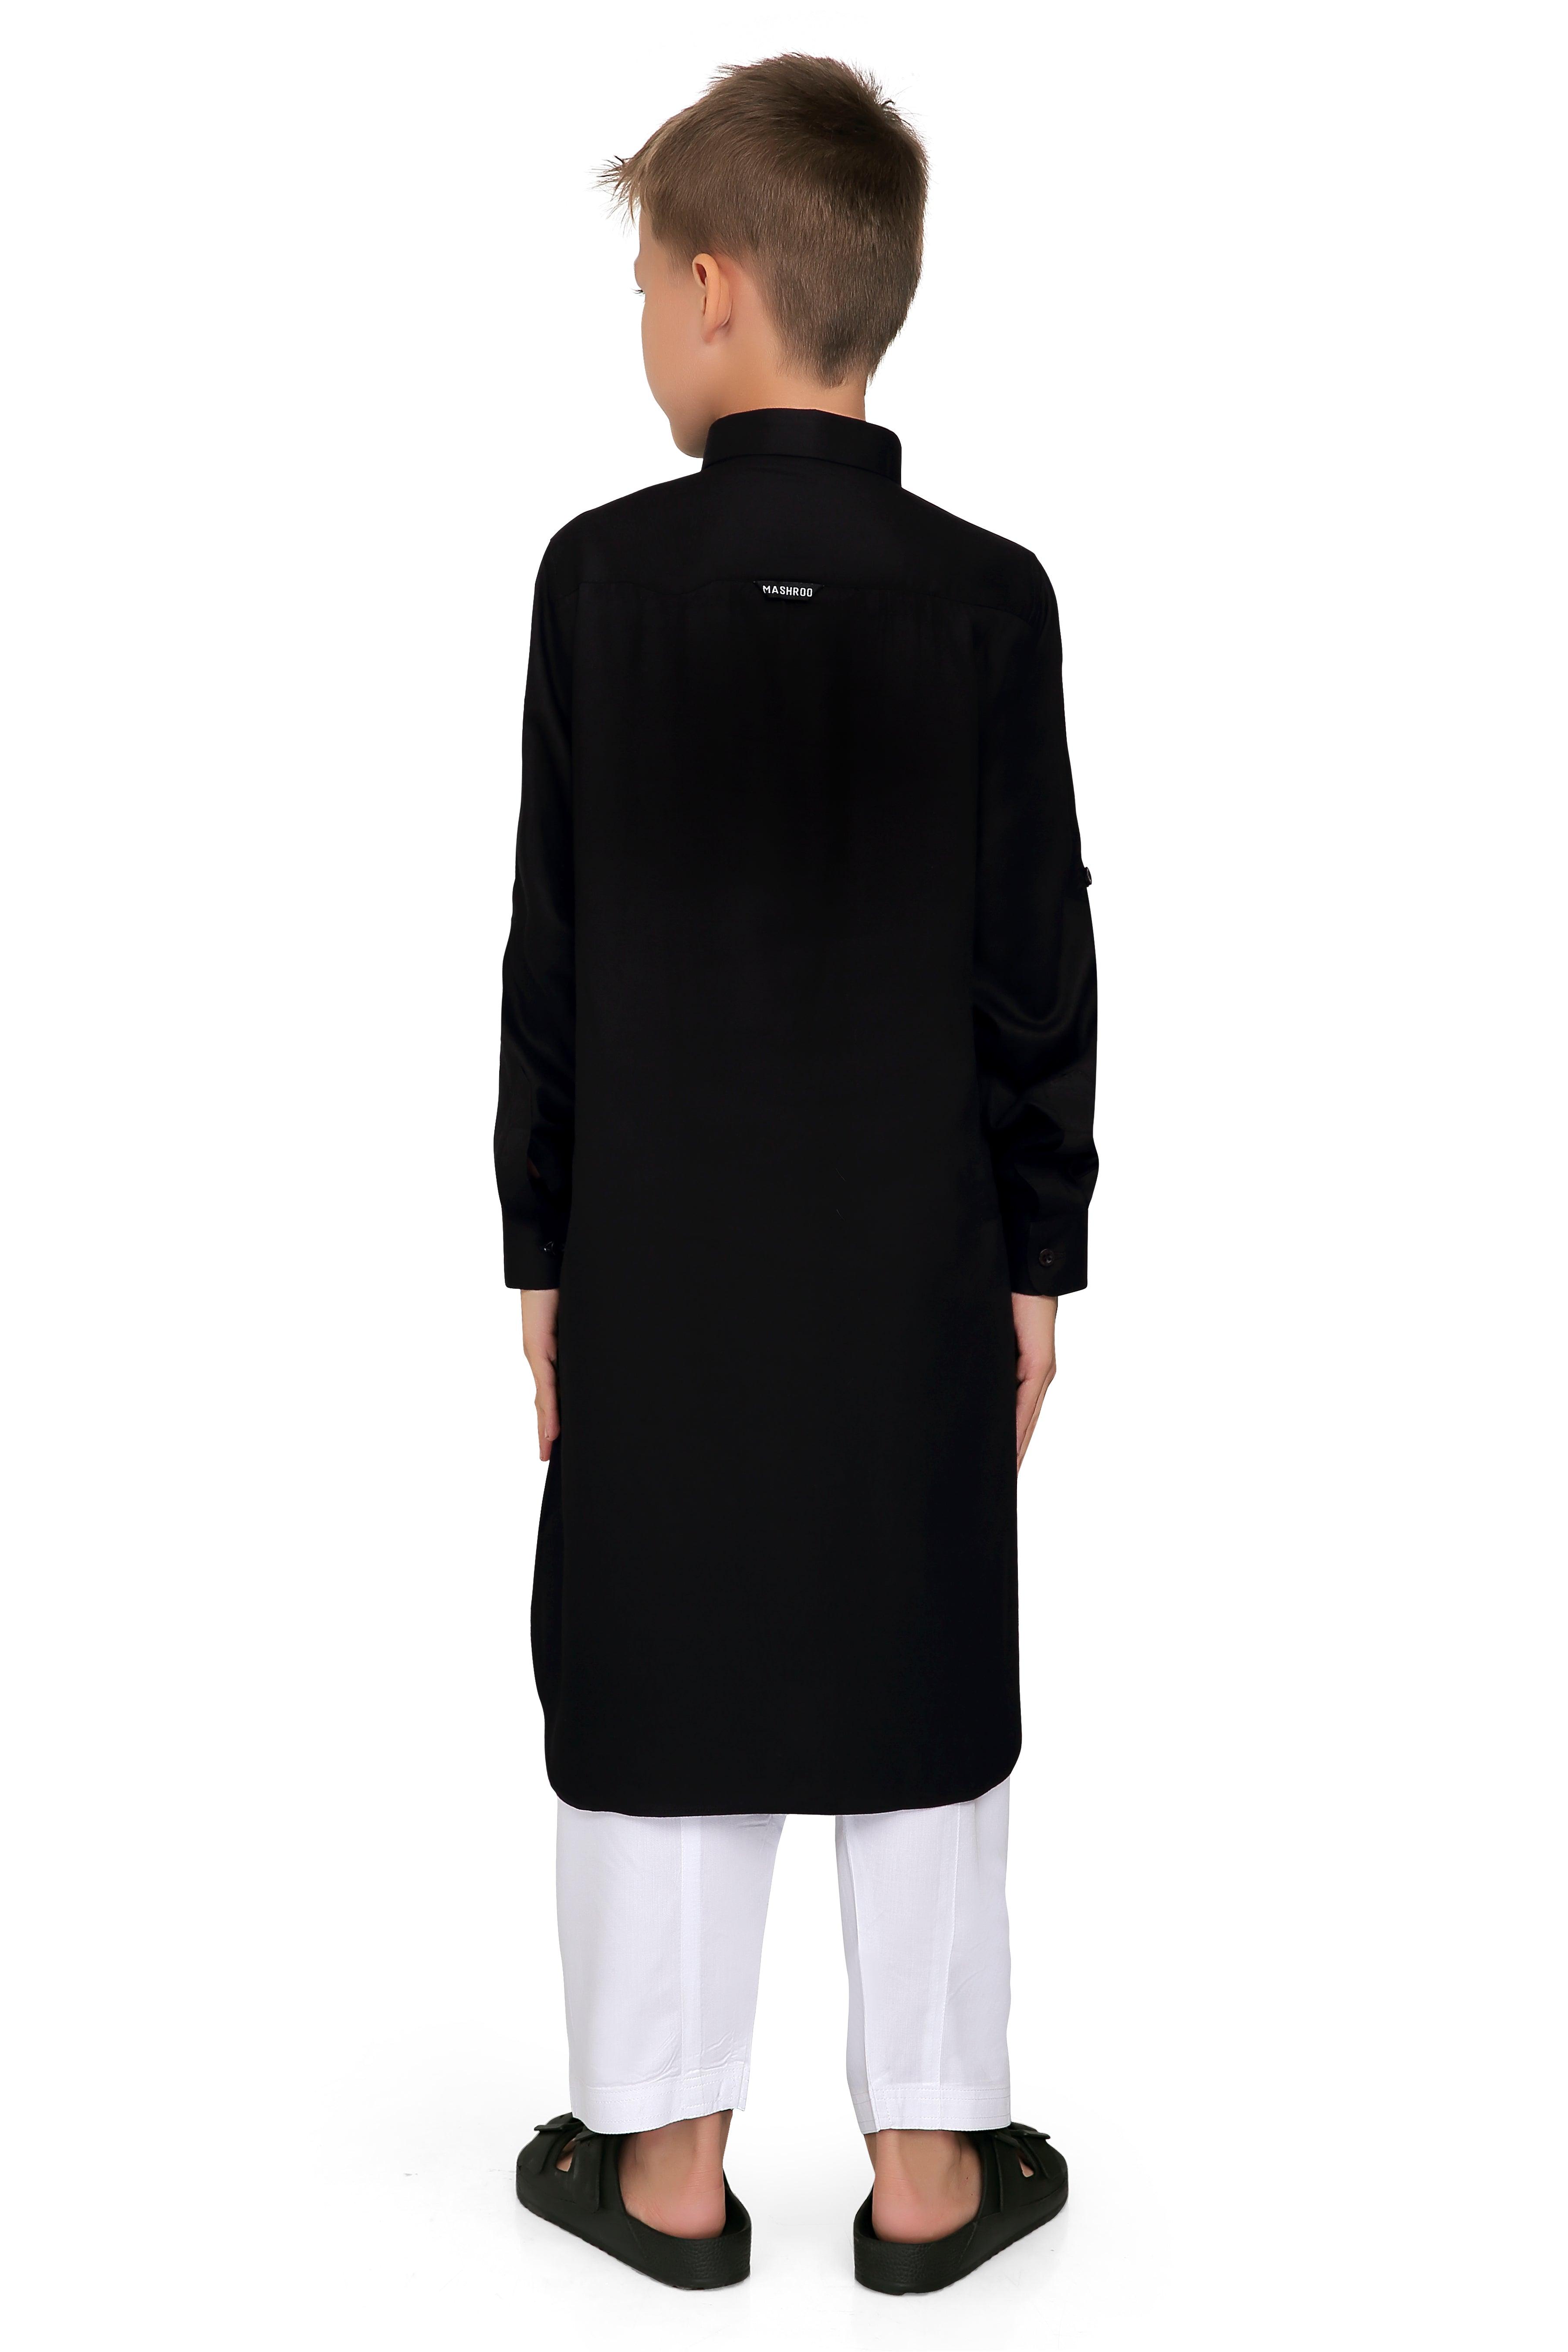 Oday Black Pathani Suit for Kids - Mashroo